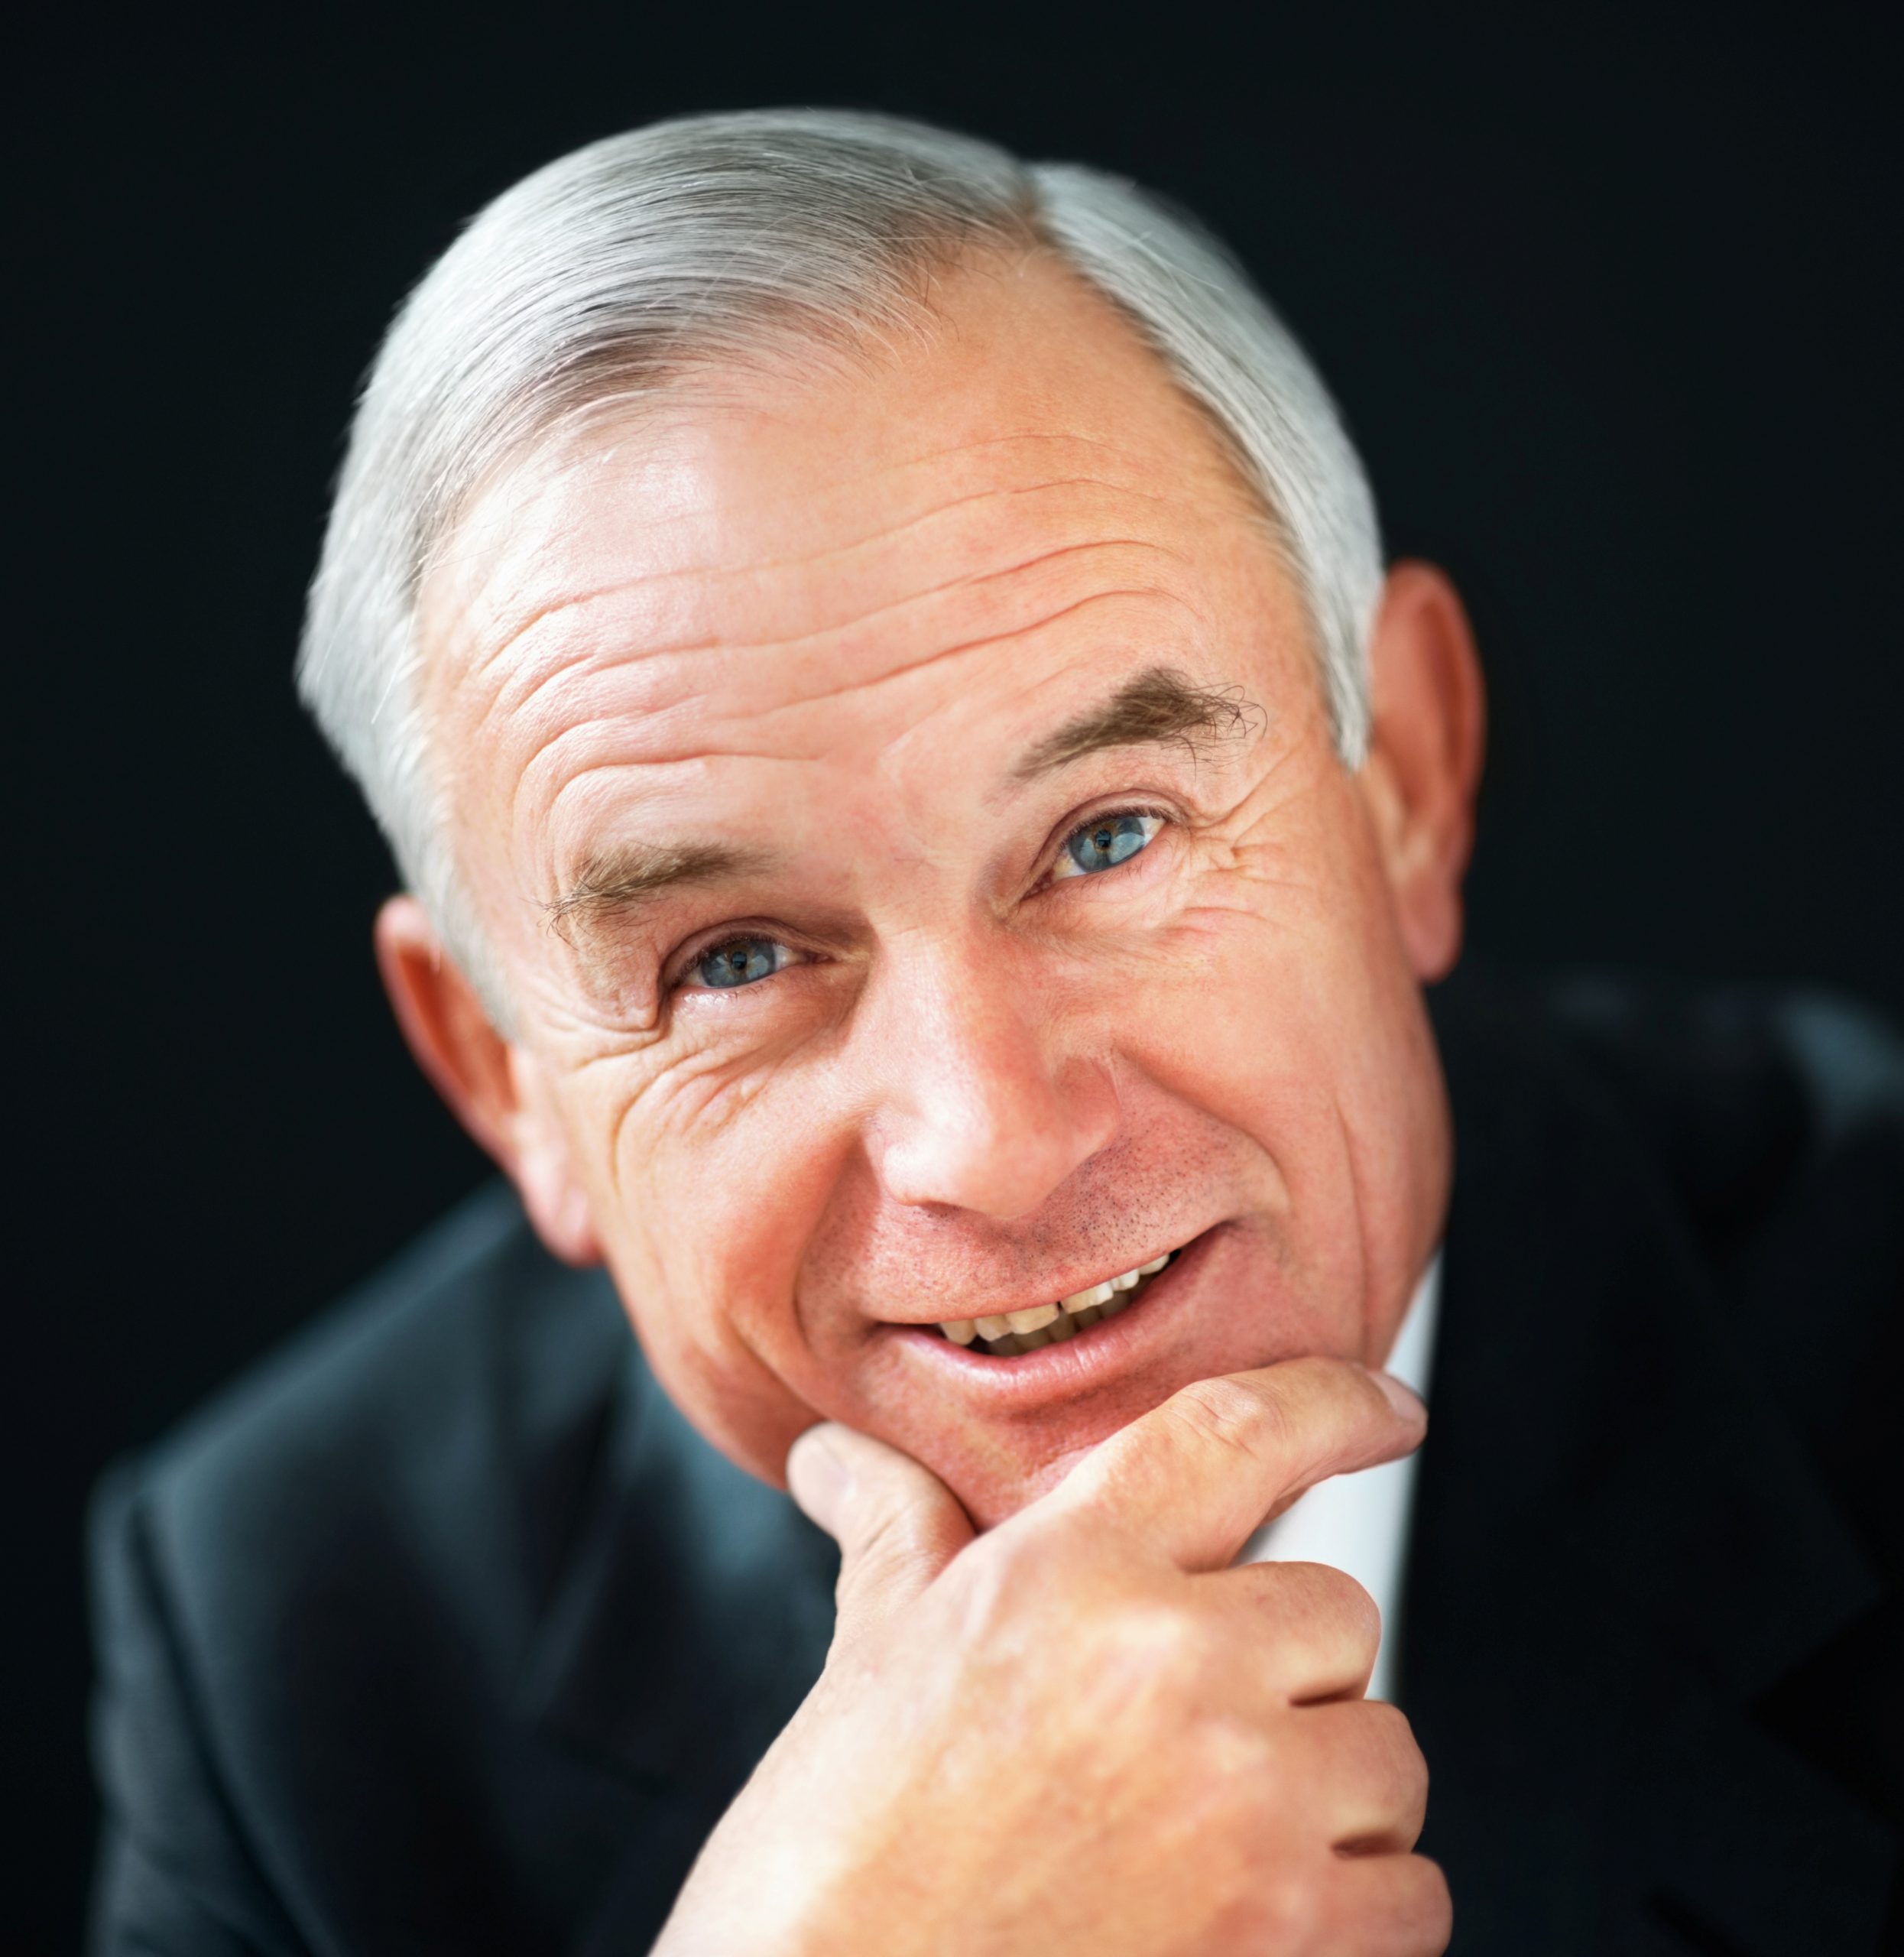 Closeup portrait of a smiling senior business man